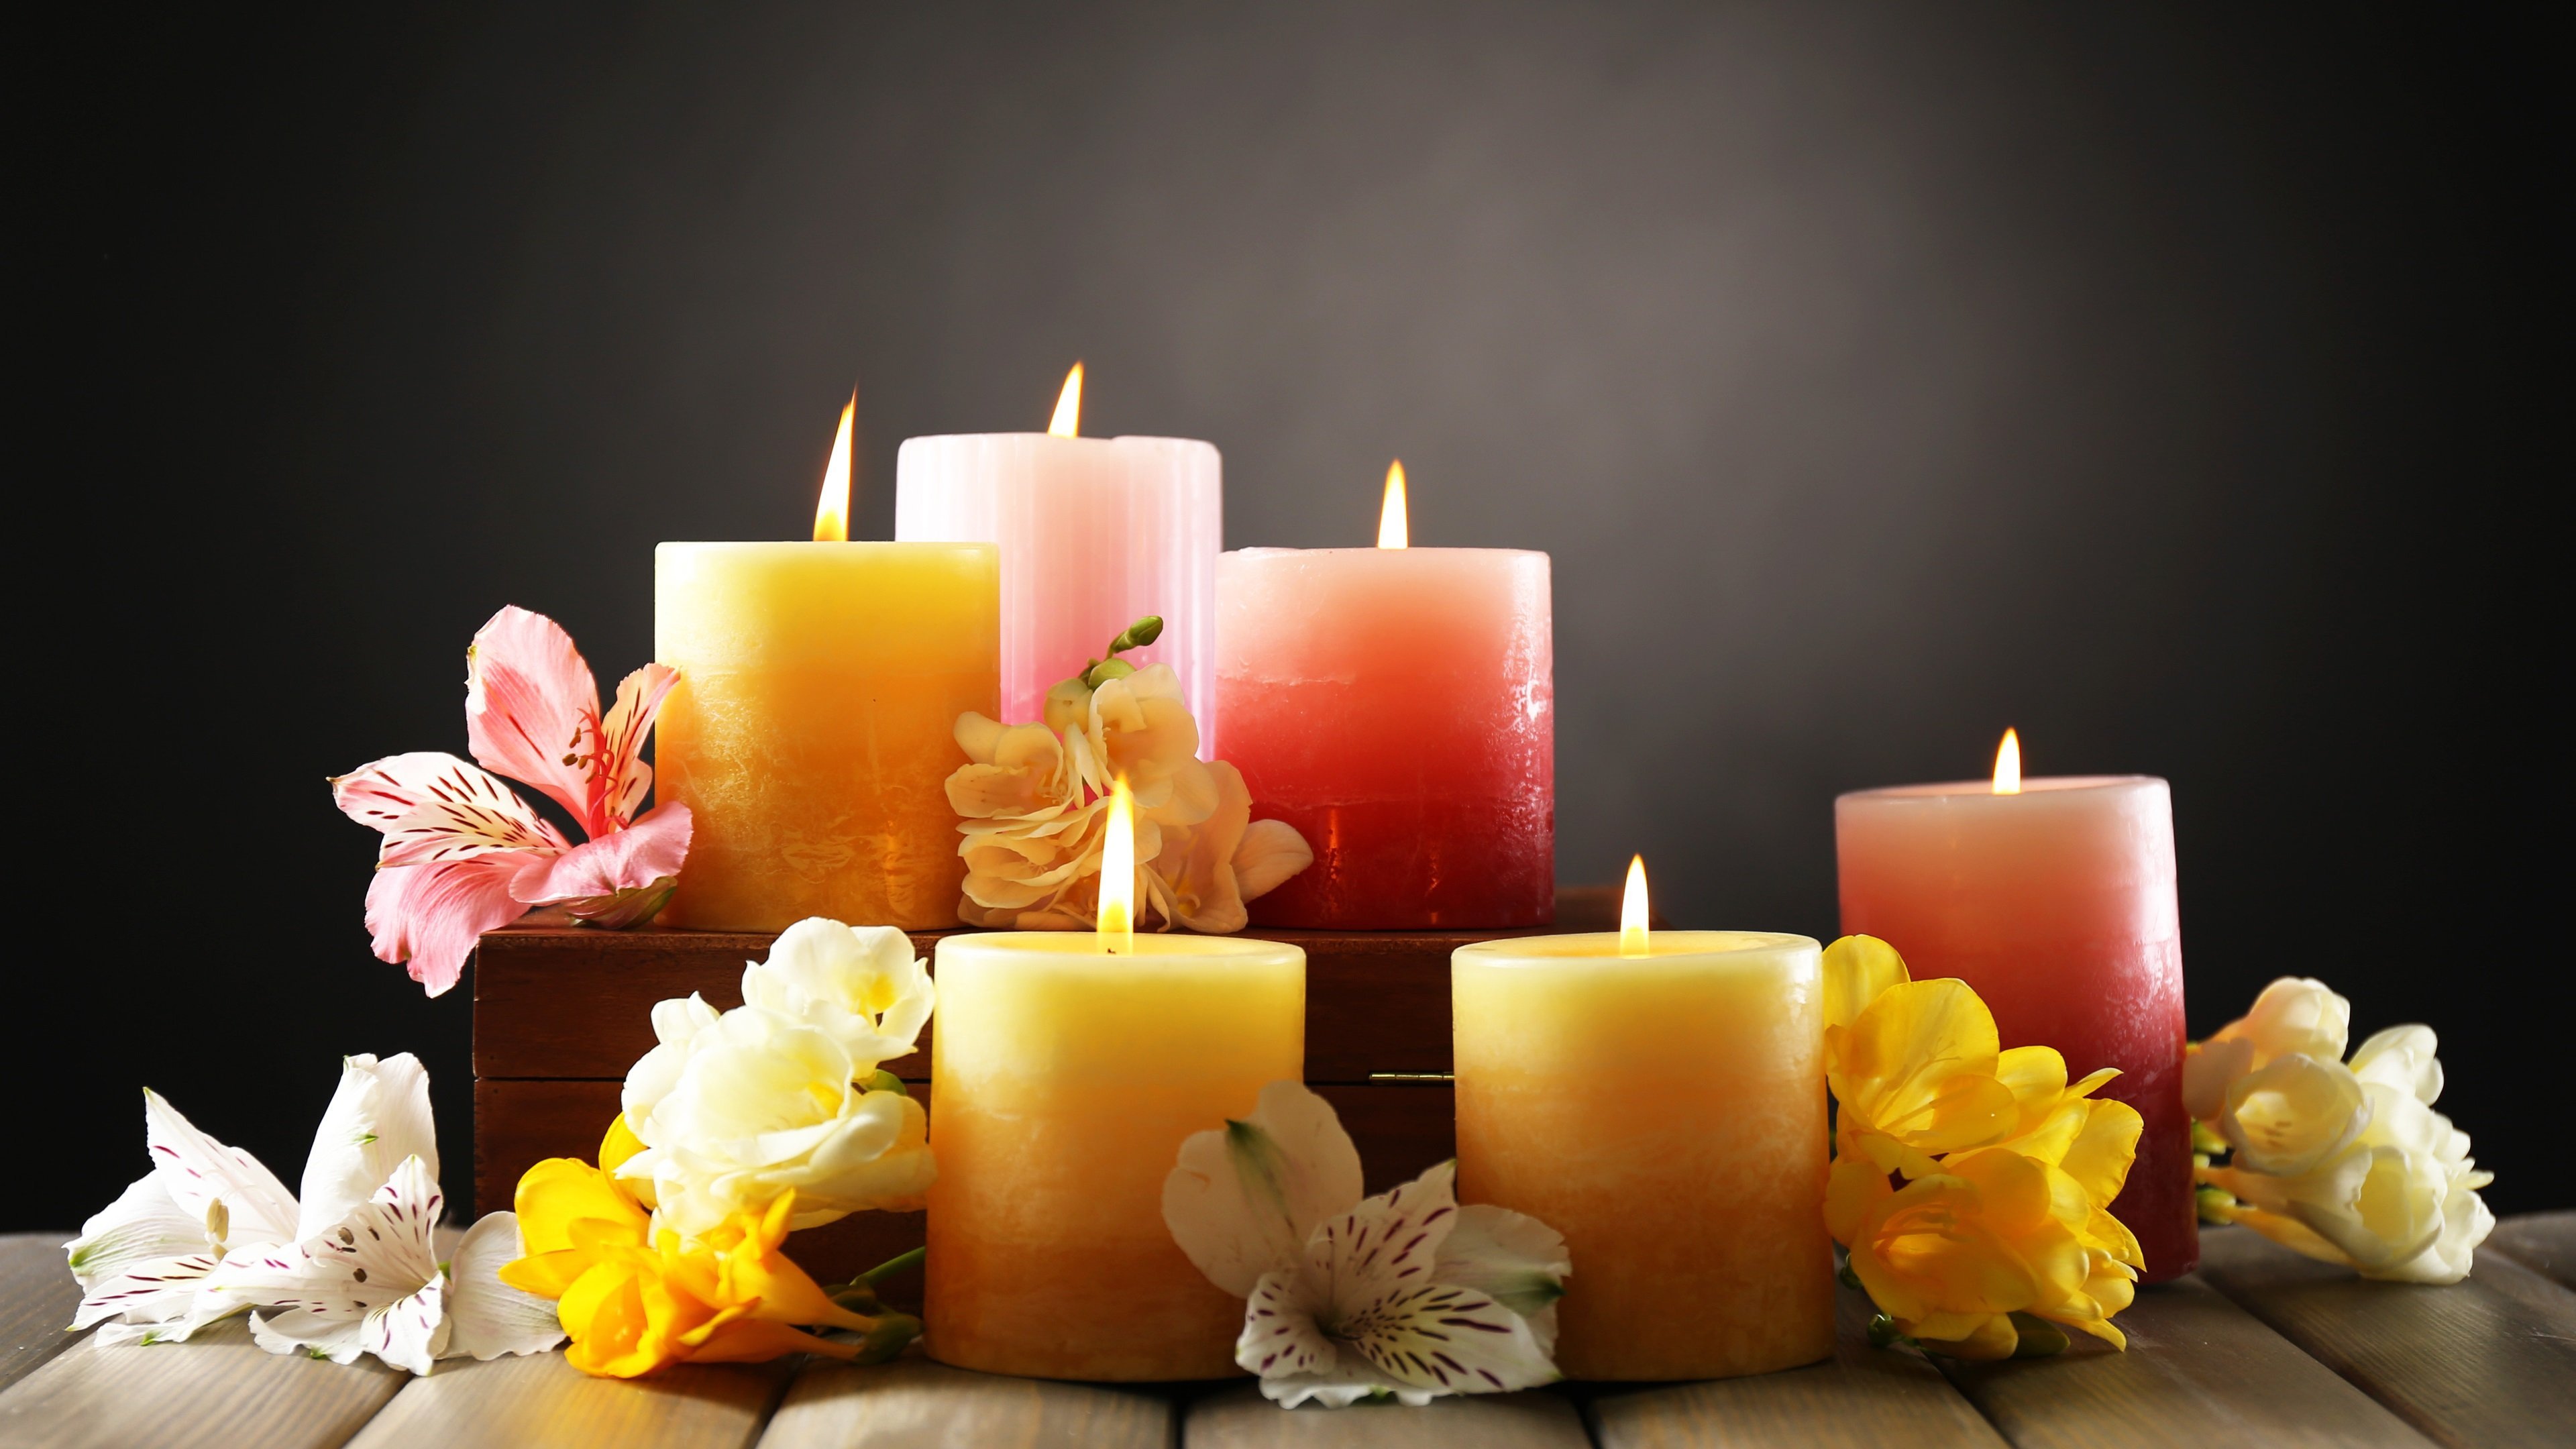 Свечка картинка. Свечи. Красивые свечи. Севичи. Разноцветные свечи.